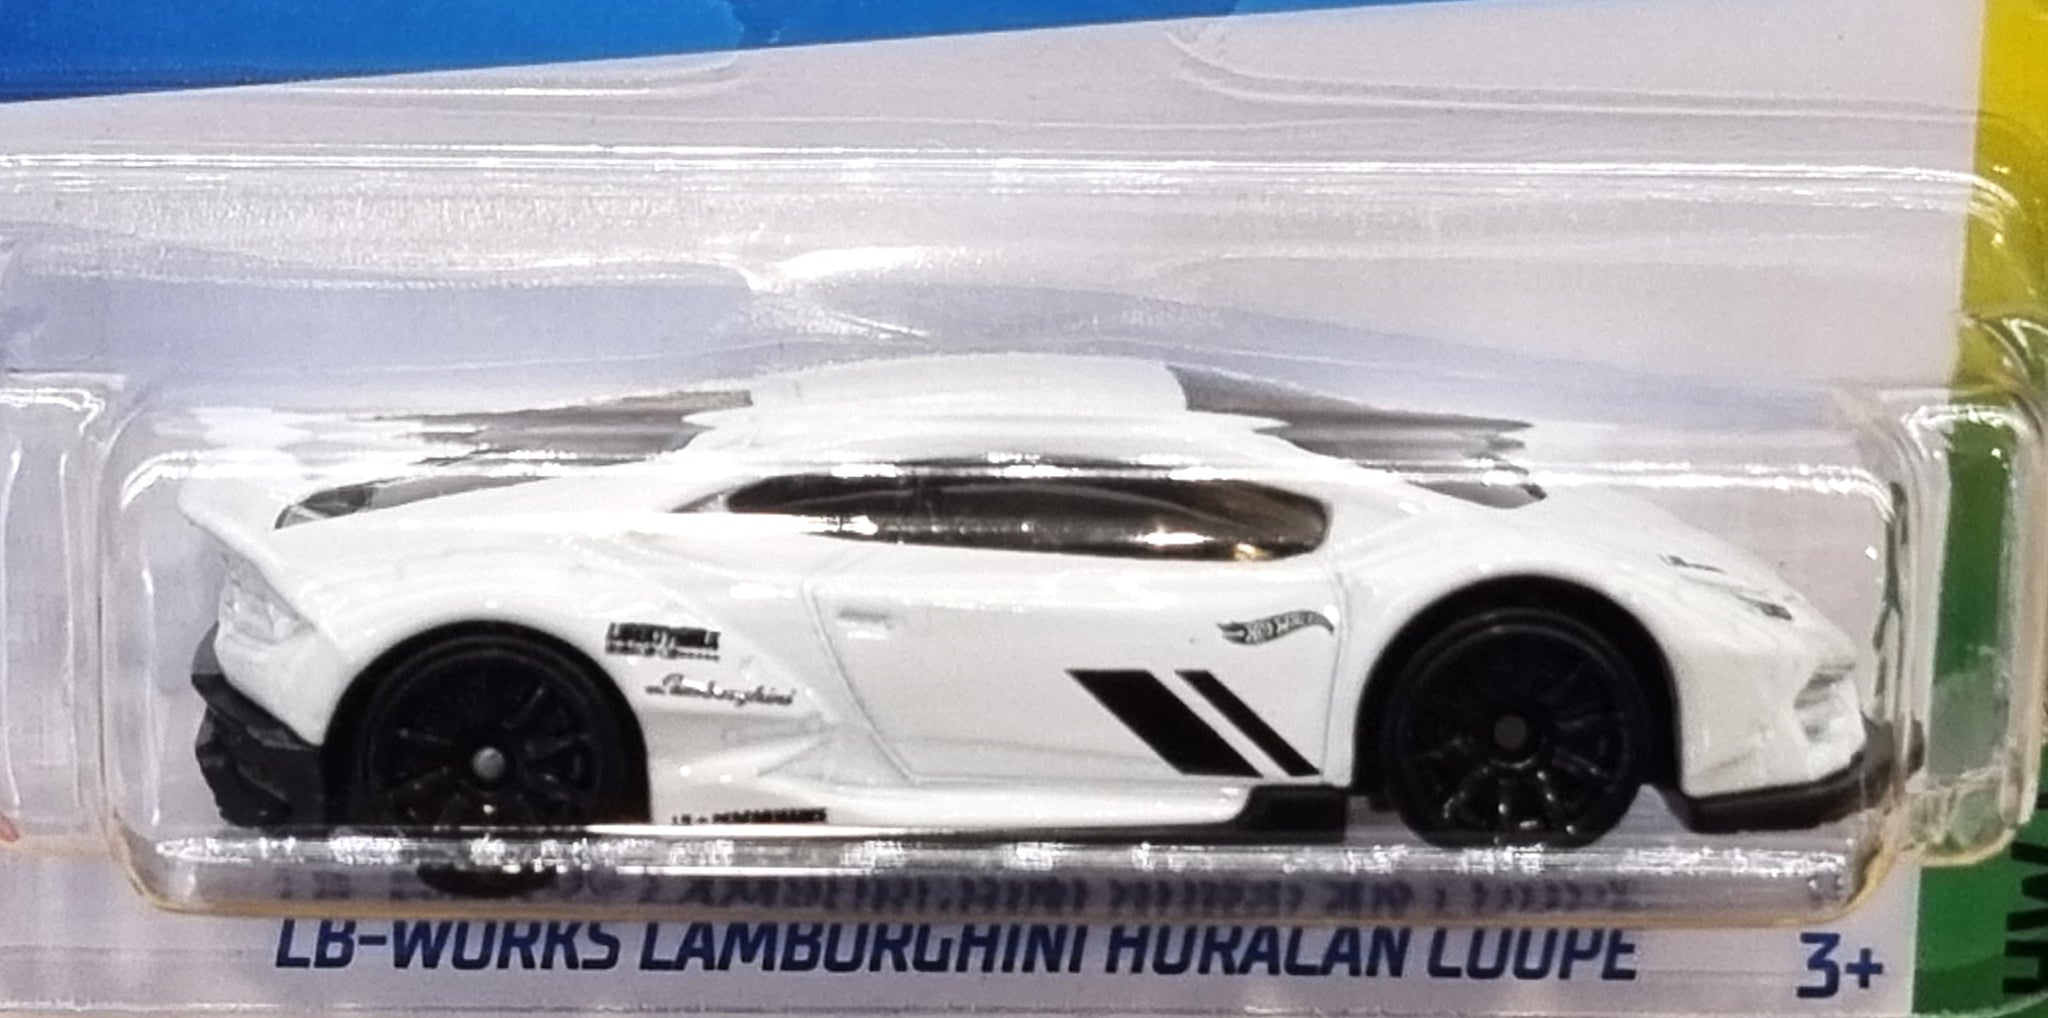 Hot Wheels LB-Work Lamborghini Huracan Coupe, Exotics 3/10